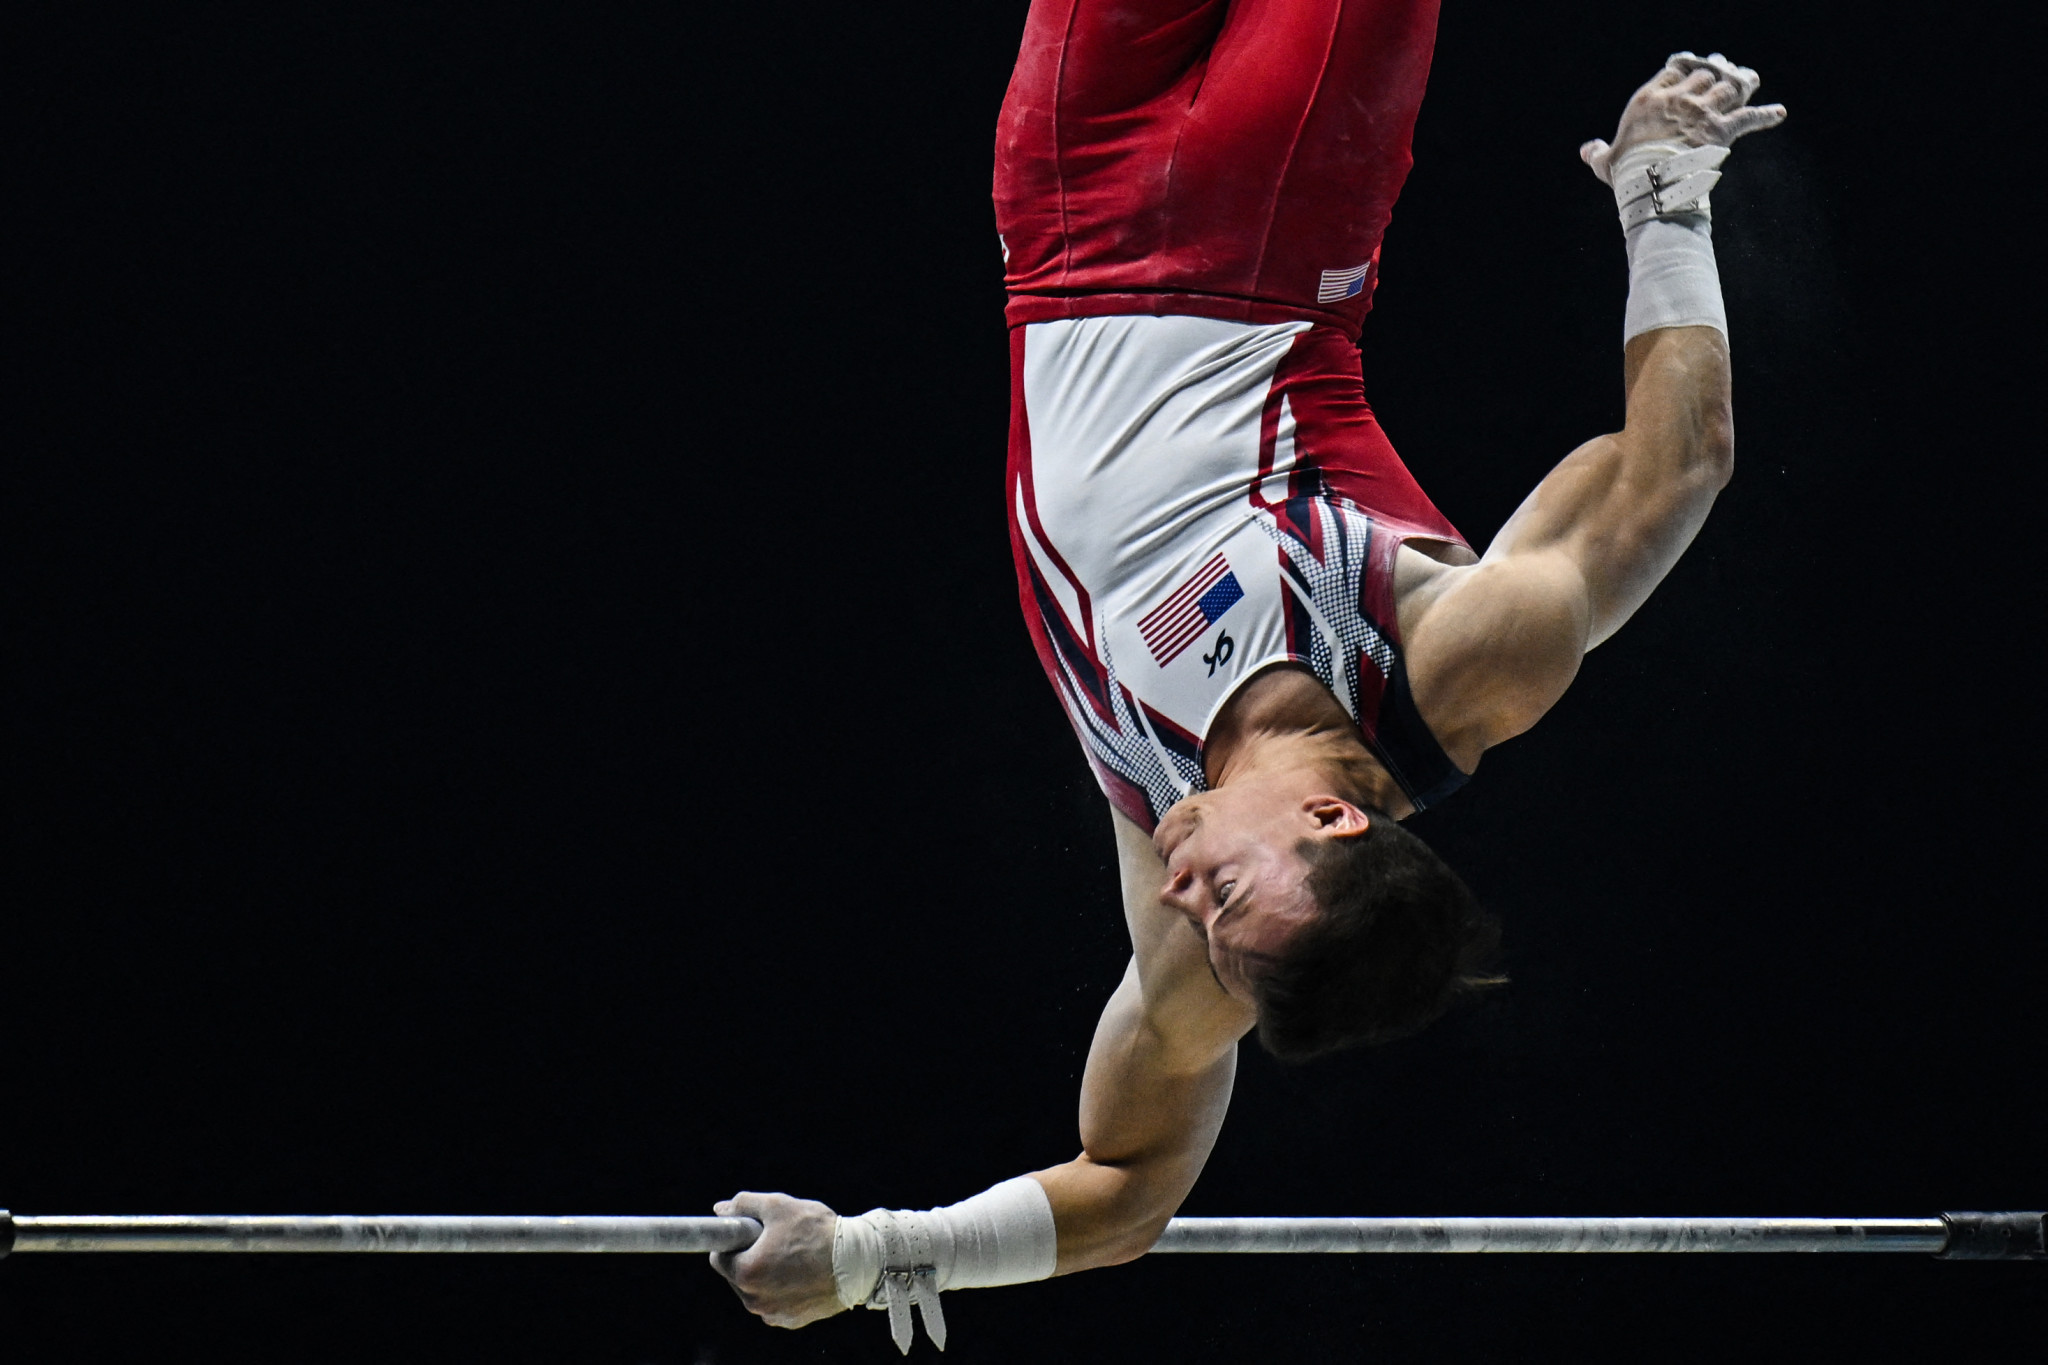 Malone triumph sees US pip China at World Artistic Gymnastics Championships